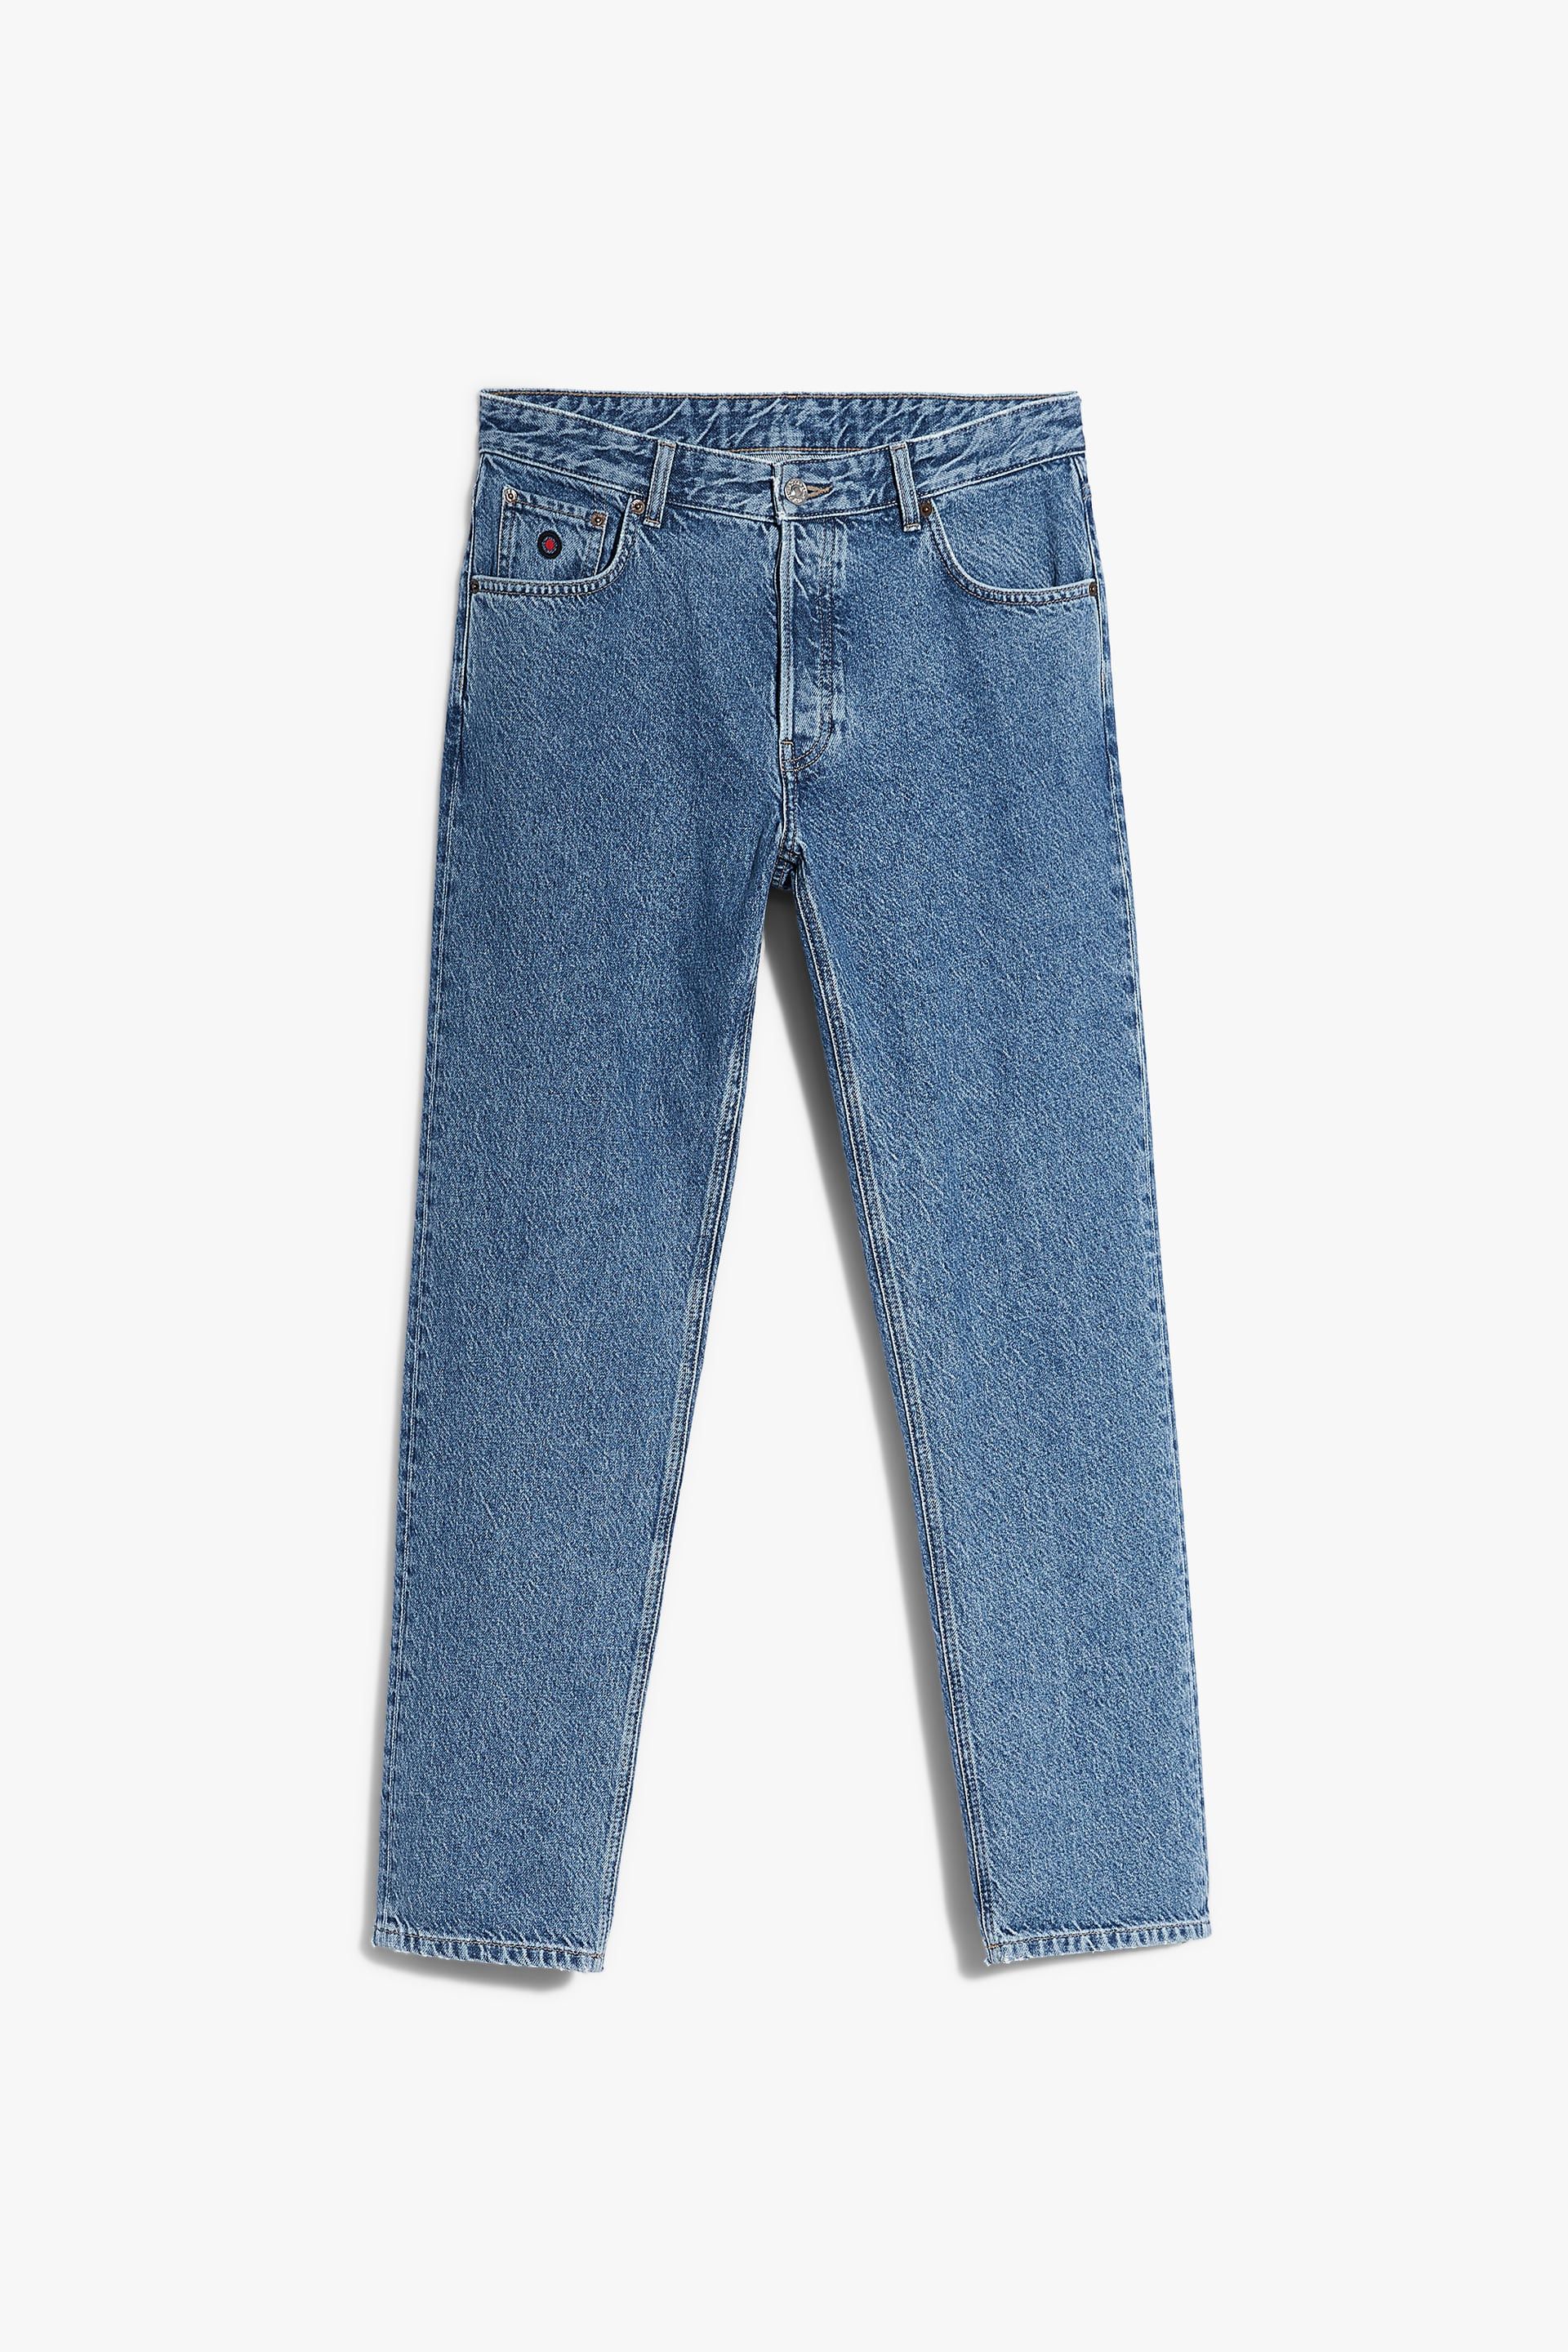 Zara Rhuigi x Zara Straight Navy Indigo Jeans Denim Size US 30 / EU 46 - 6 Thumbnail